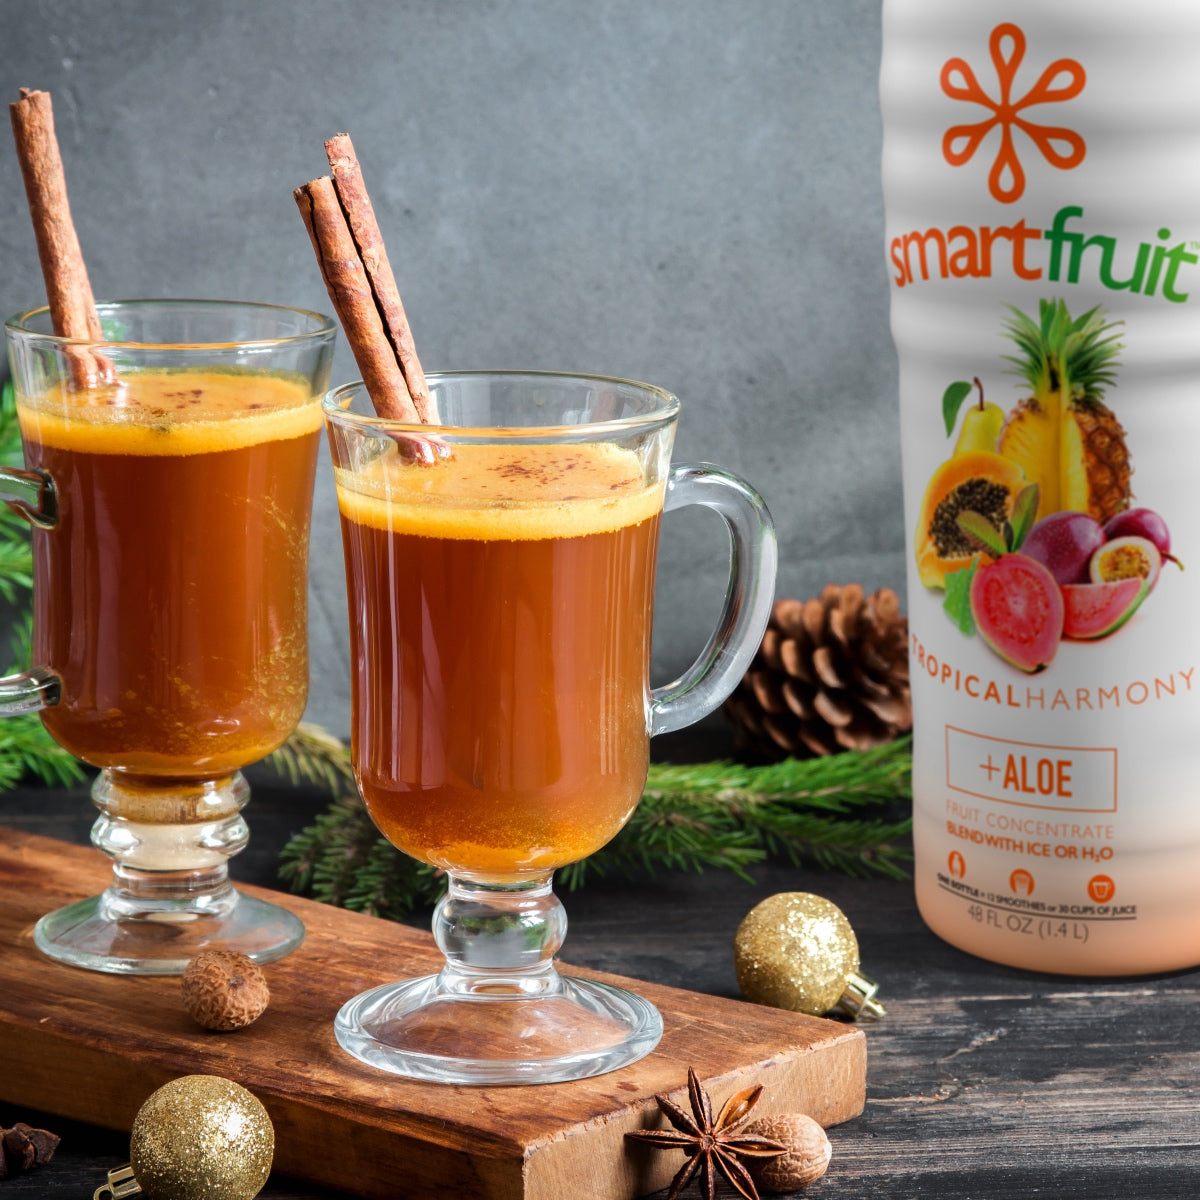 SmartFruit - 100% Real Fruit Puree: 48 fl. oz. Bottle: Tropical Harmony